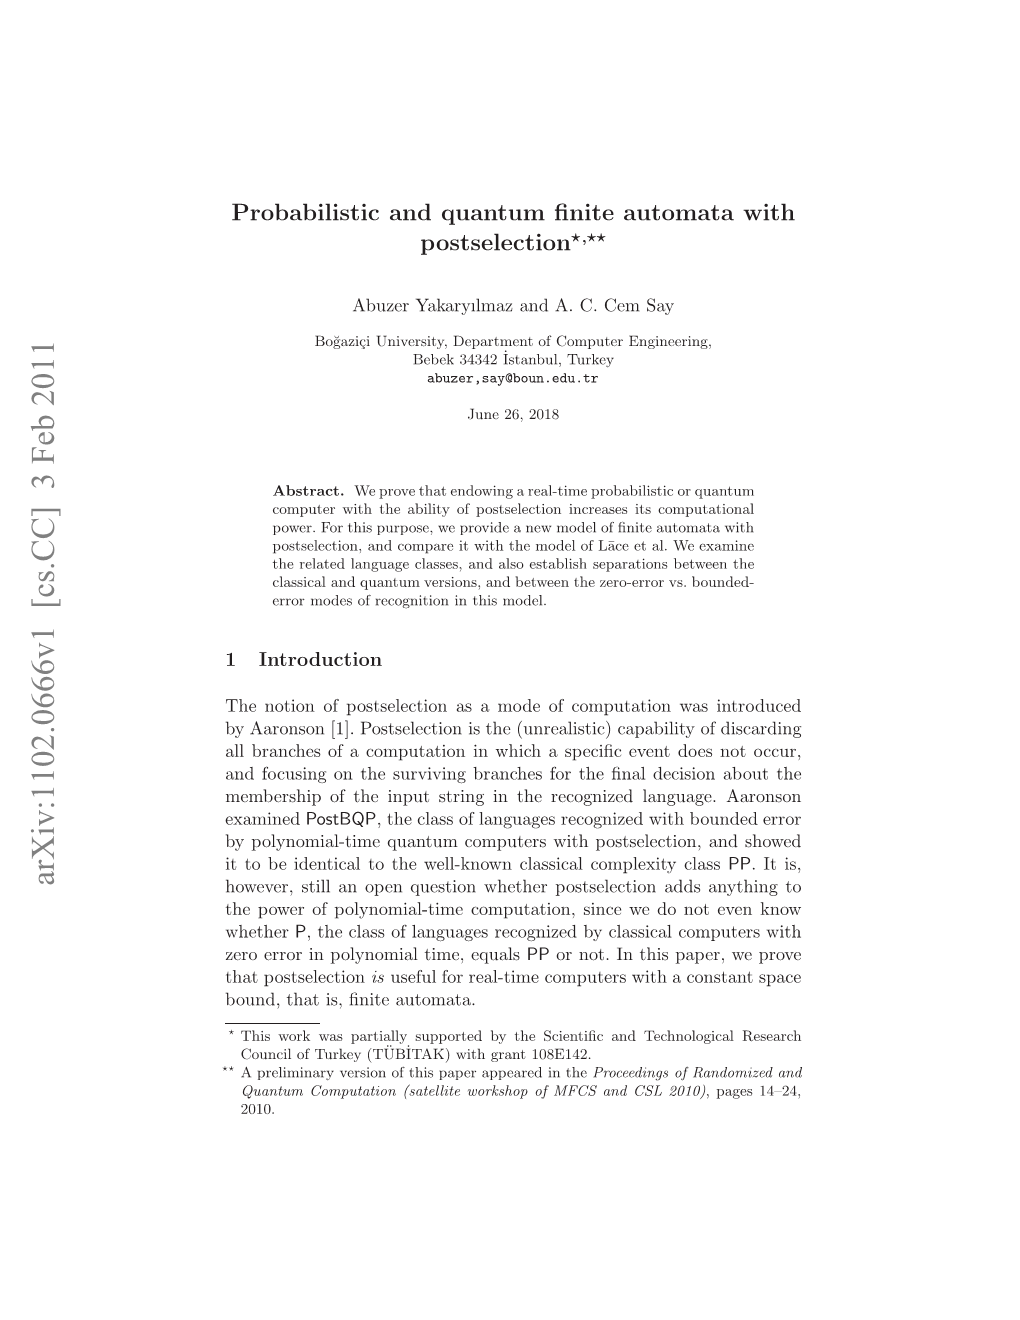 Probabilistic and Quantum Finite Automata with Postselection